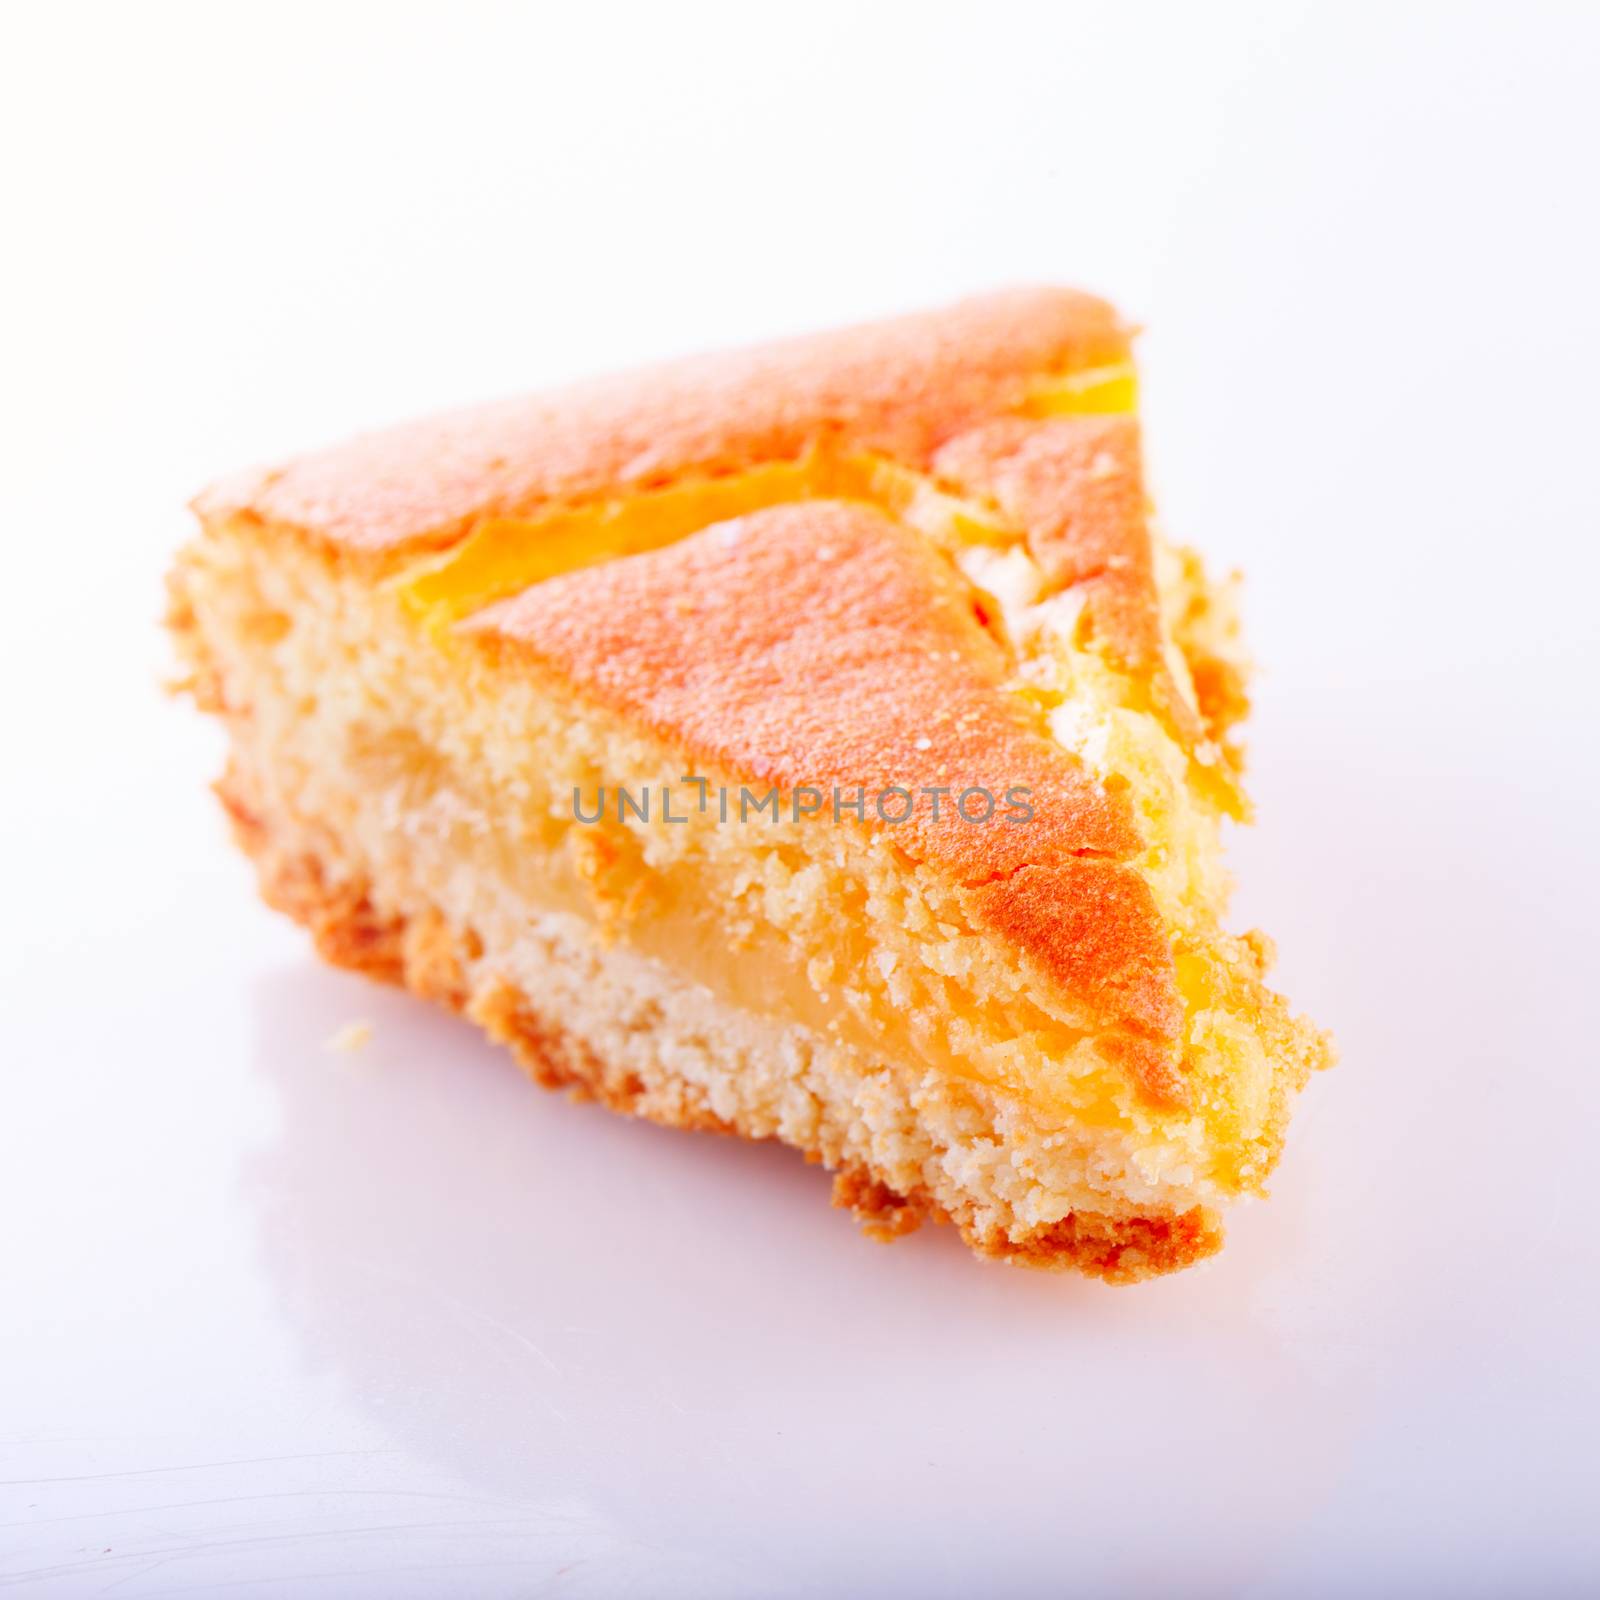 Lemon cake over white background, square image